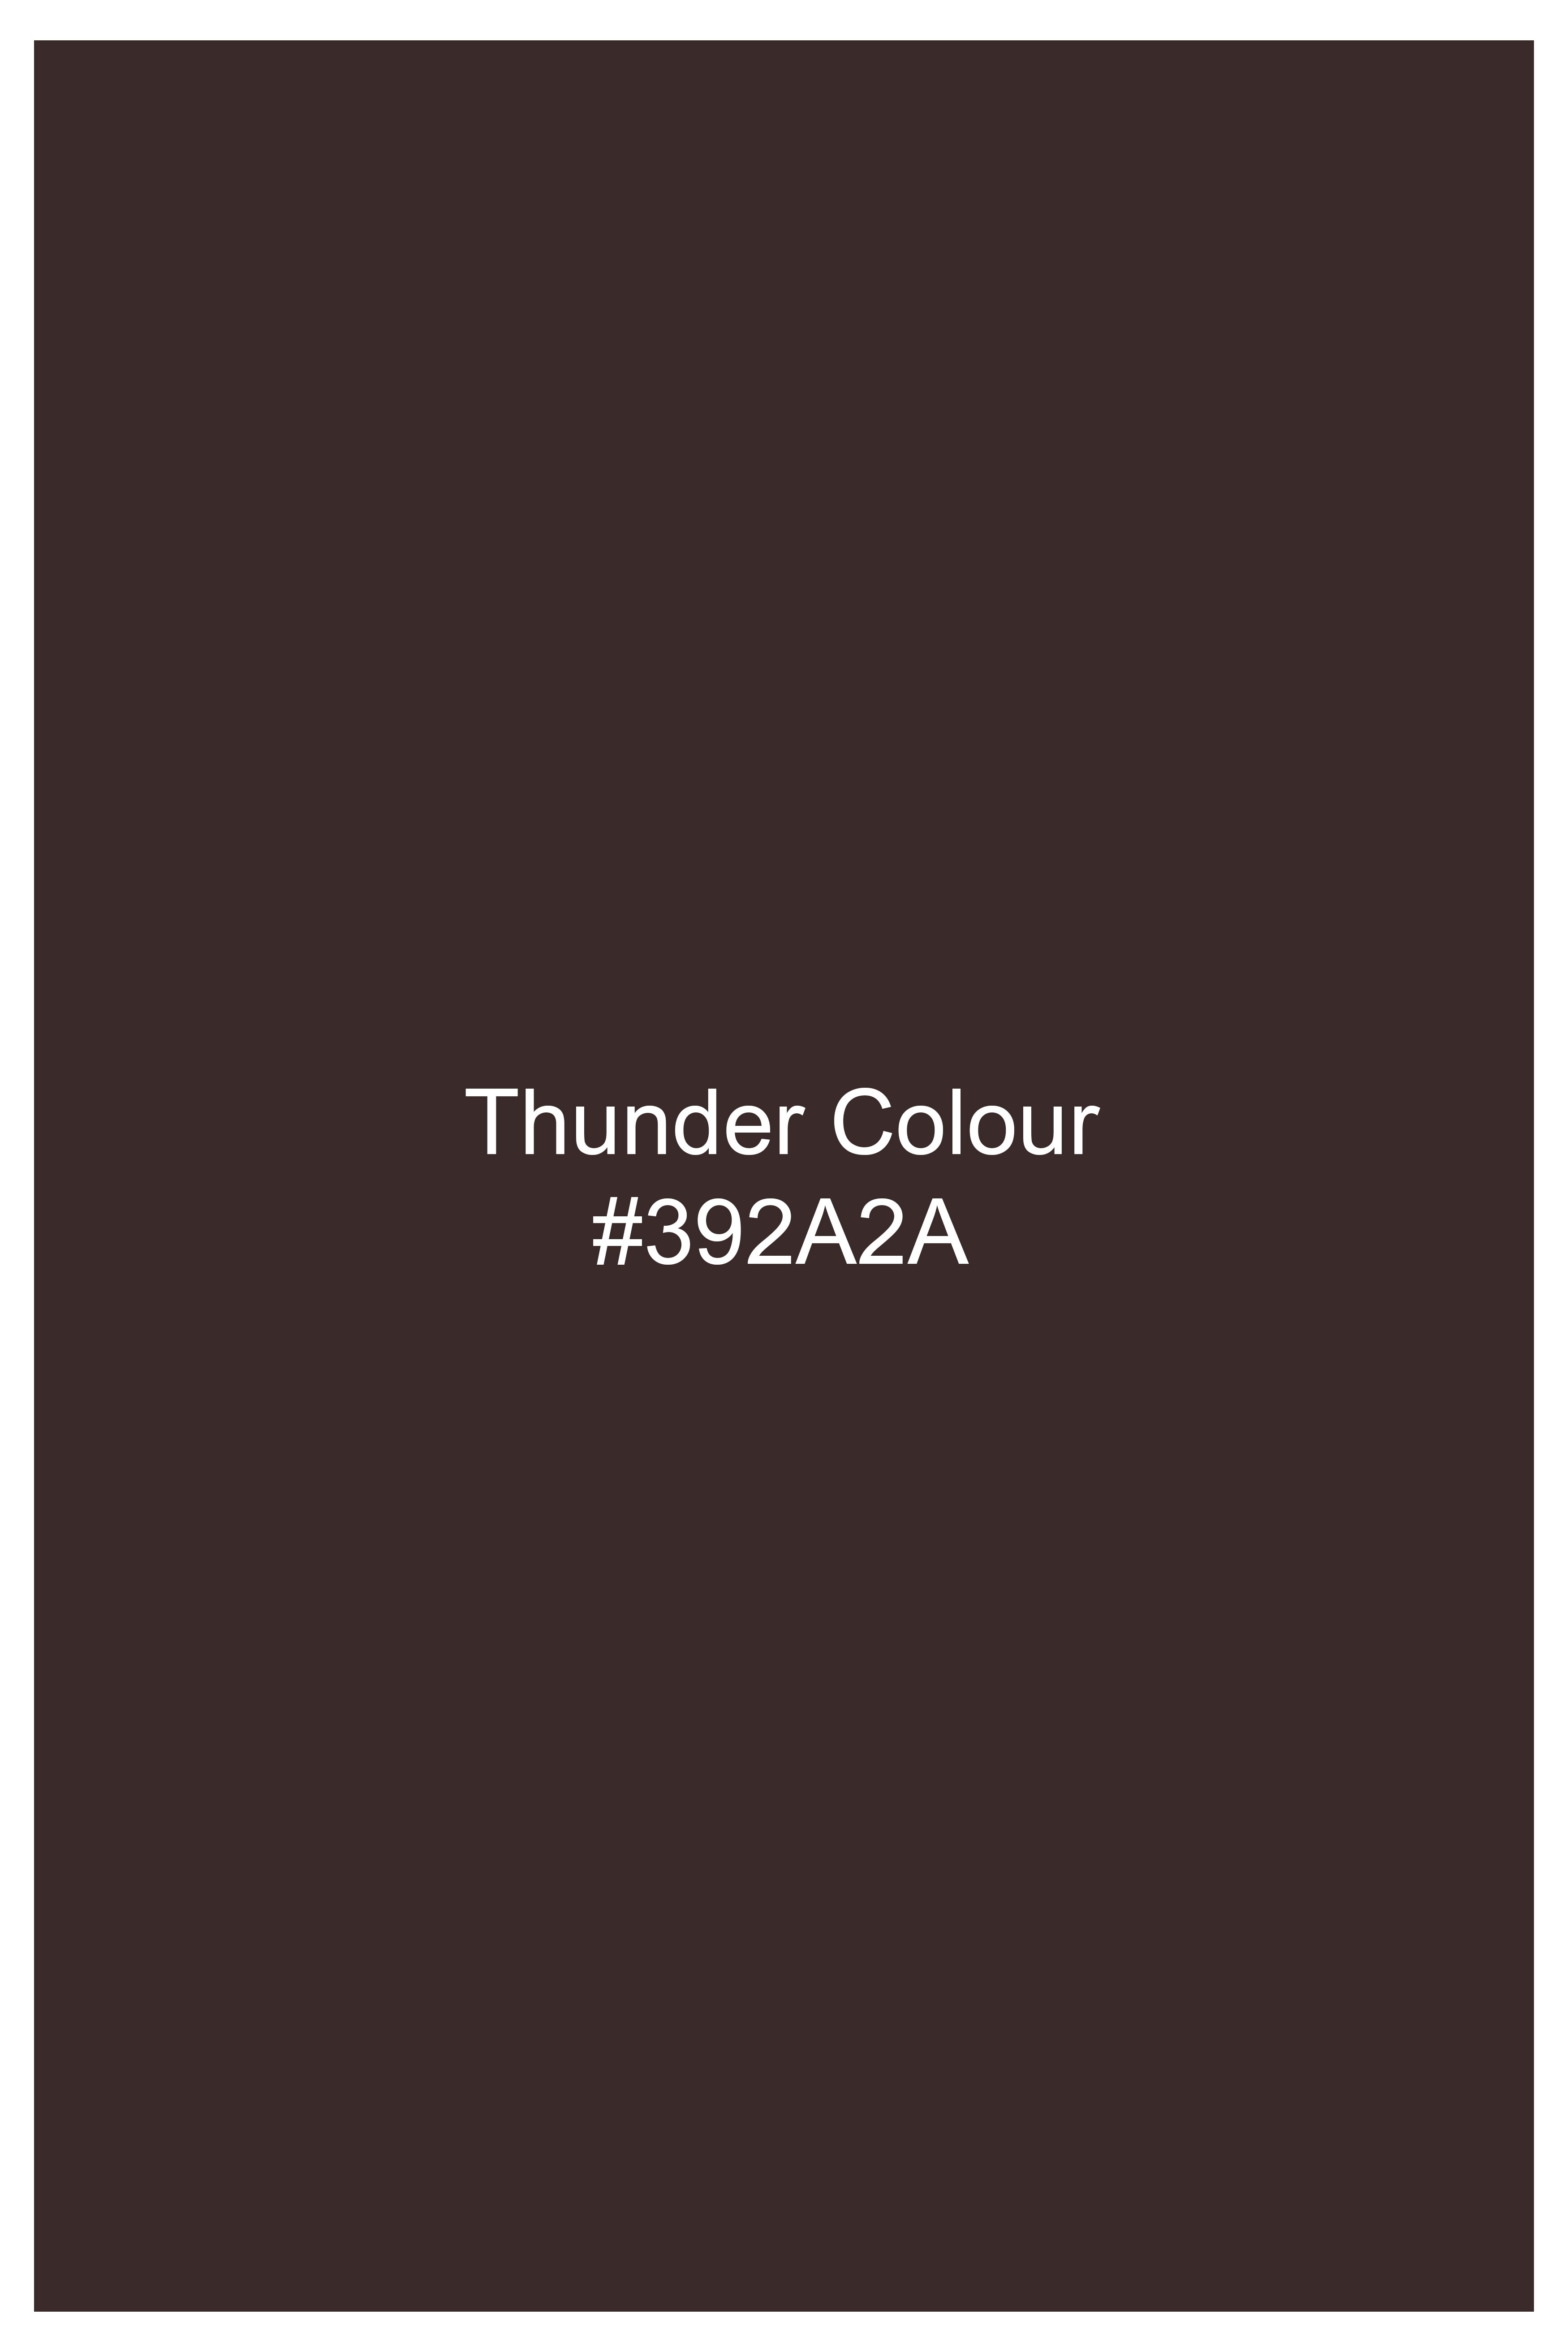 Thunder Brown Wool Rich Designer Blazer BL3067-SB-D386-36, BL3067-SB-D386-38, BL3067-SB-D386-40, BL3067-SB-D386-42, BL3067-SB-D386-44, BL3067-SB-D386-46, BL3067-SB-D386-48, BL3067-SB-D386-50, BL3067-SB-D386-52, BL3067-SB-D386-54, BL3067-SB-D386-56, BL3067-SB-D386-58, BL3067-SB-D386-60